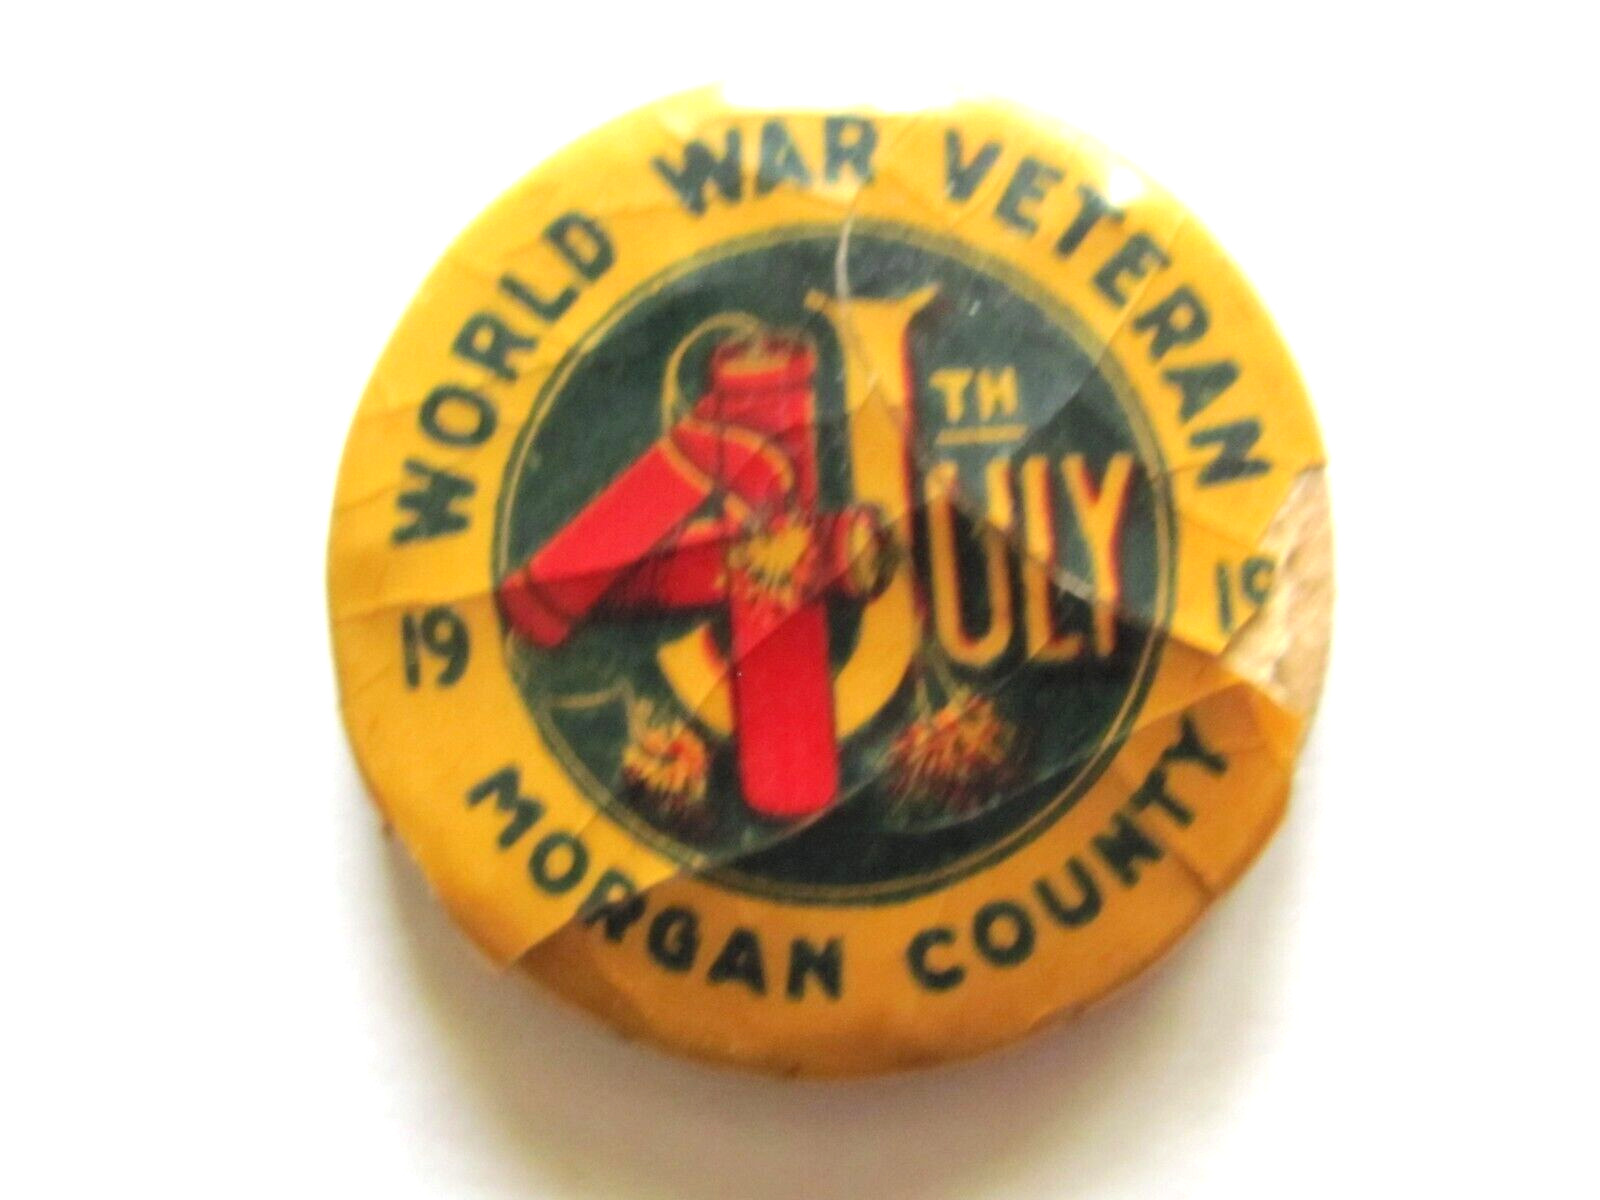 1919 4th JULY BUTTON PIN MORGAN COUNTY ILLINOIS WORLD WAR VETERAN ROUGH